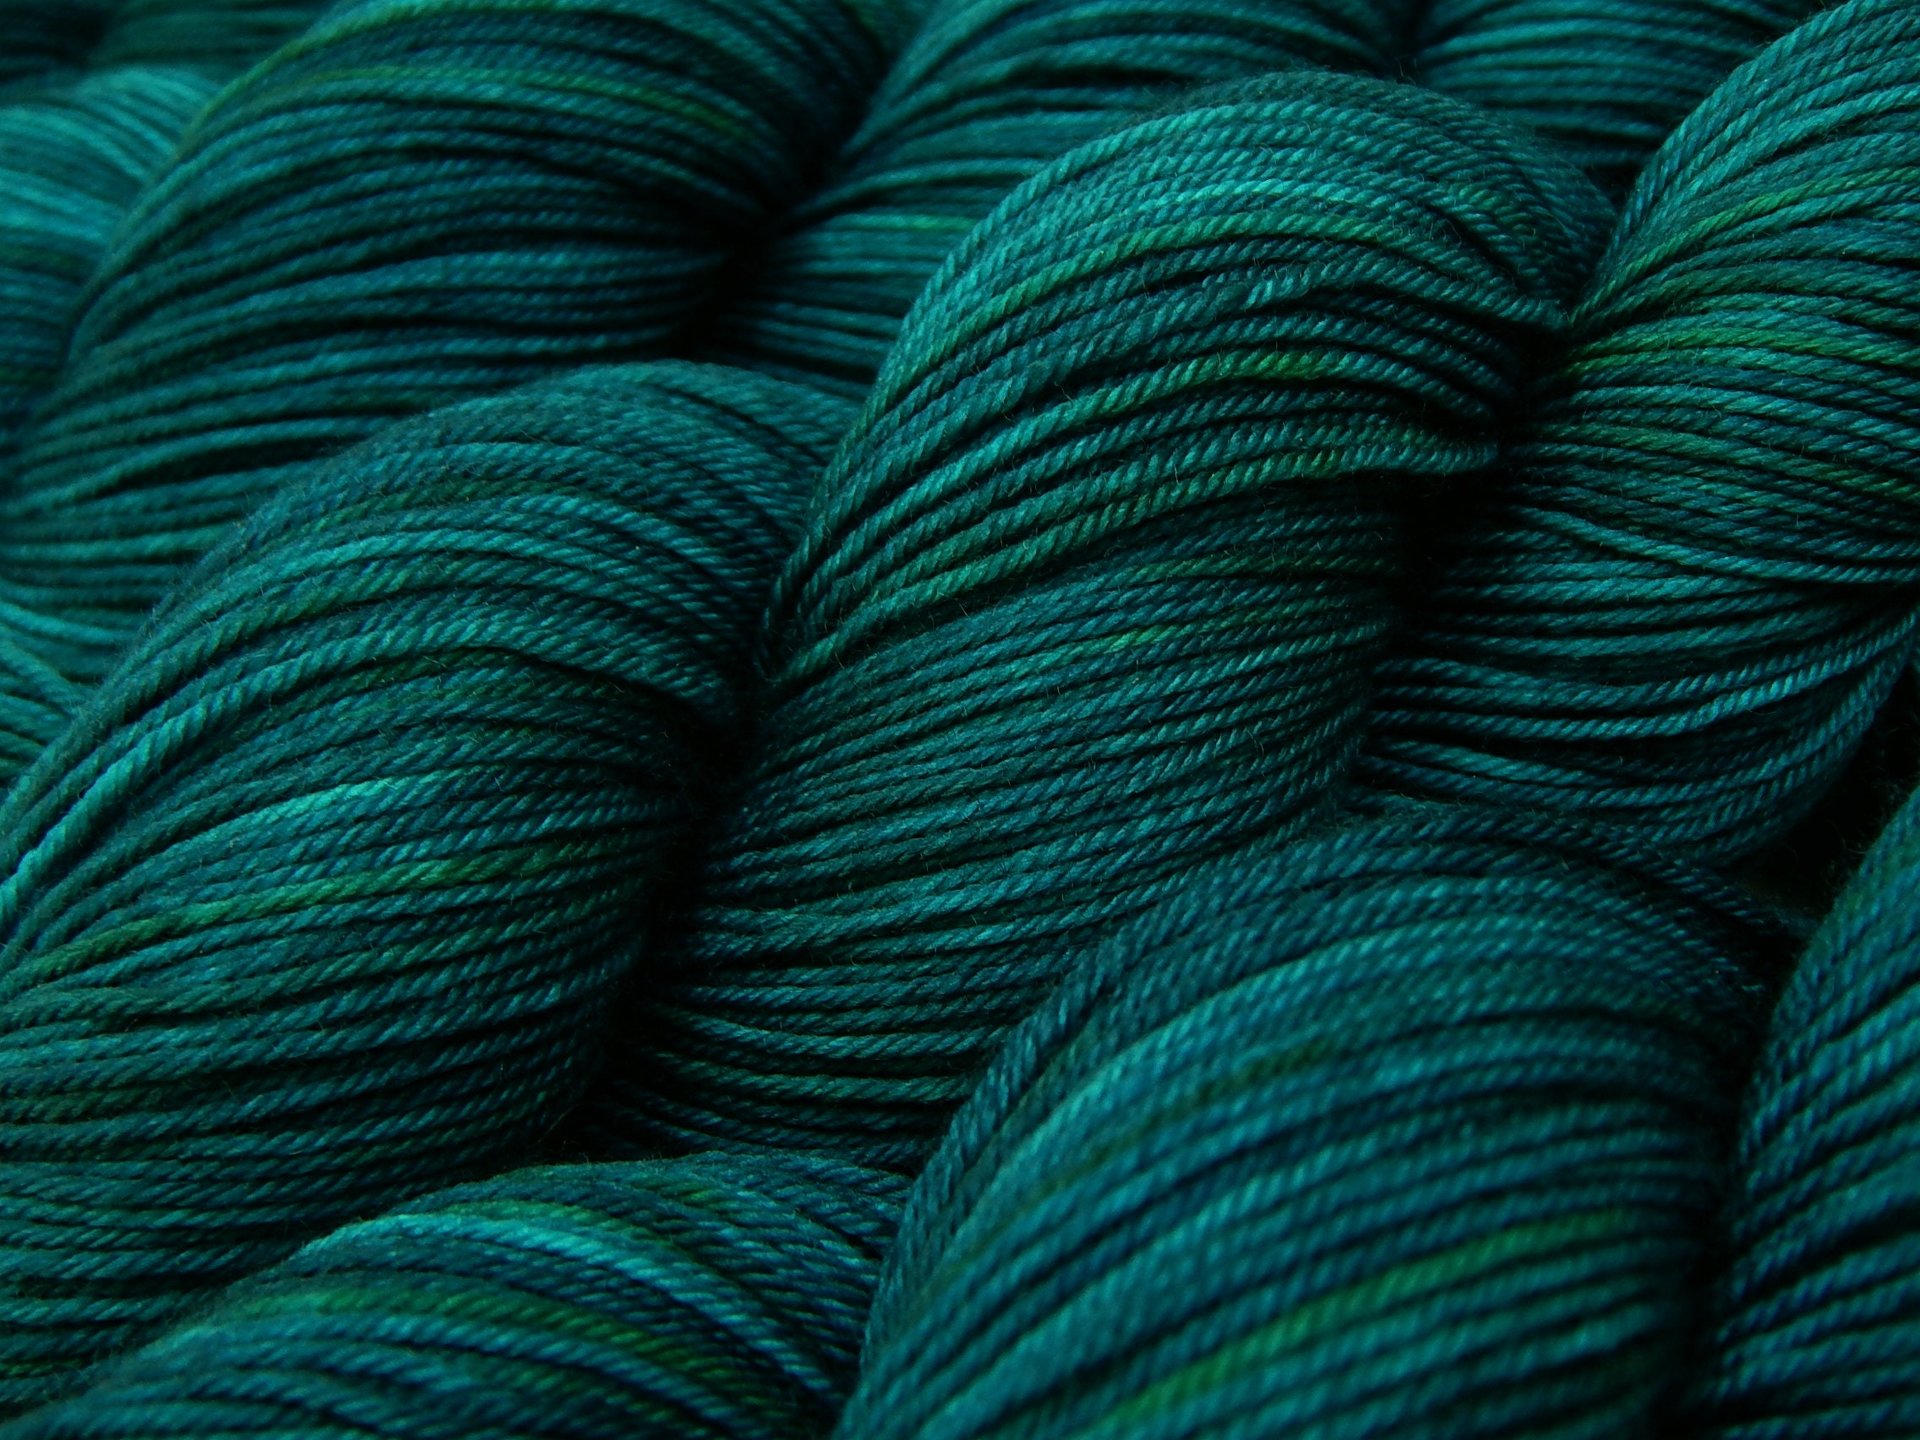 Hand Dyed Yarn, Sock Fingering Weight 4 Ply Superwash Merino Wool - Deep Sea Tonal - Indie Knitting Yarn, Blue Green Teal Handdyed Sock Yarn